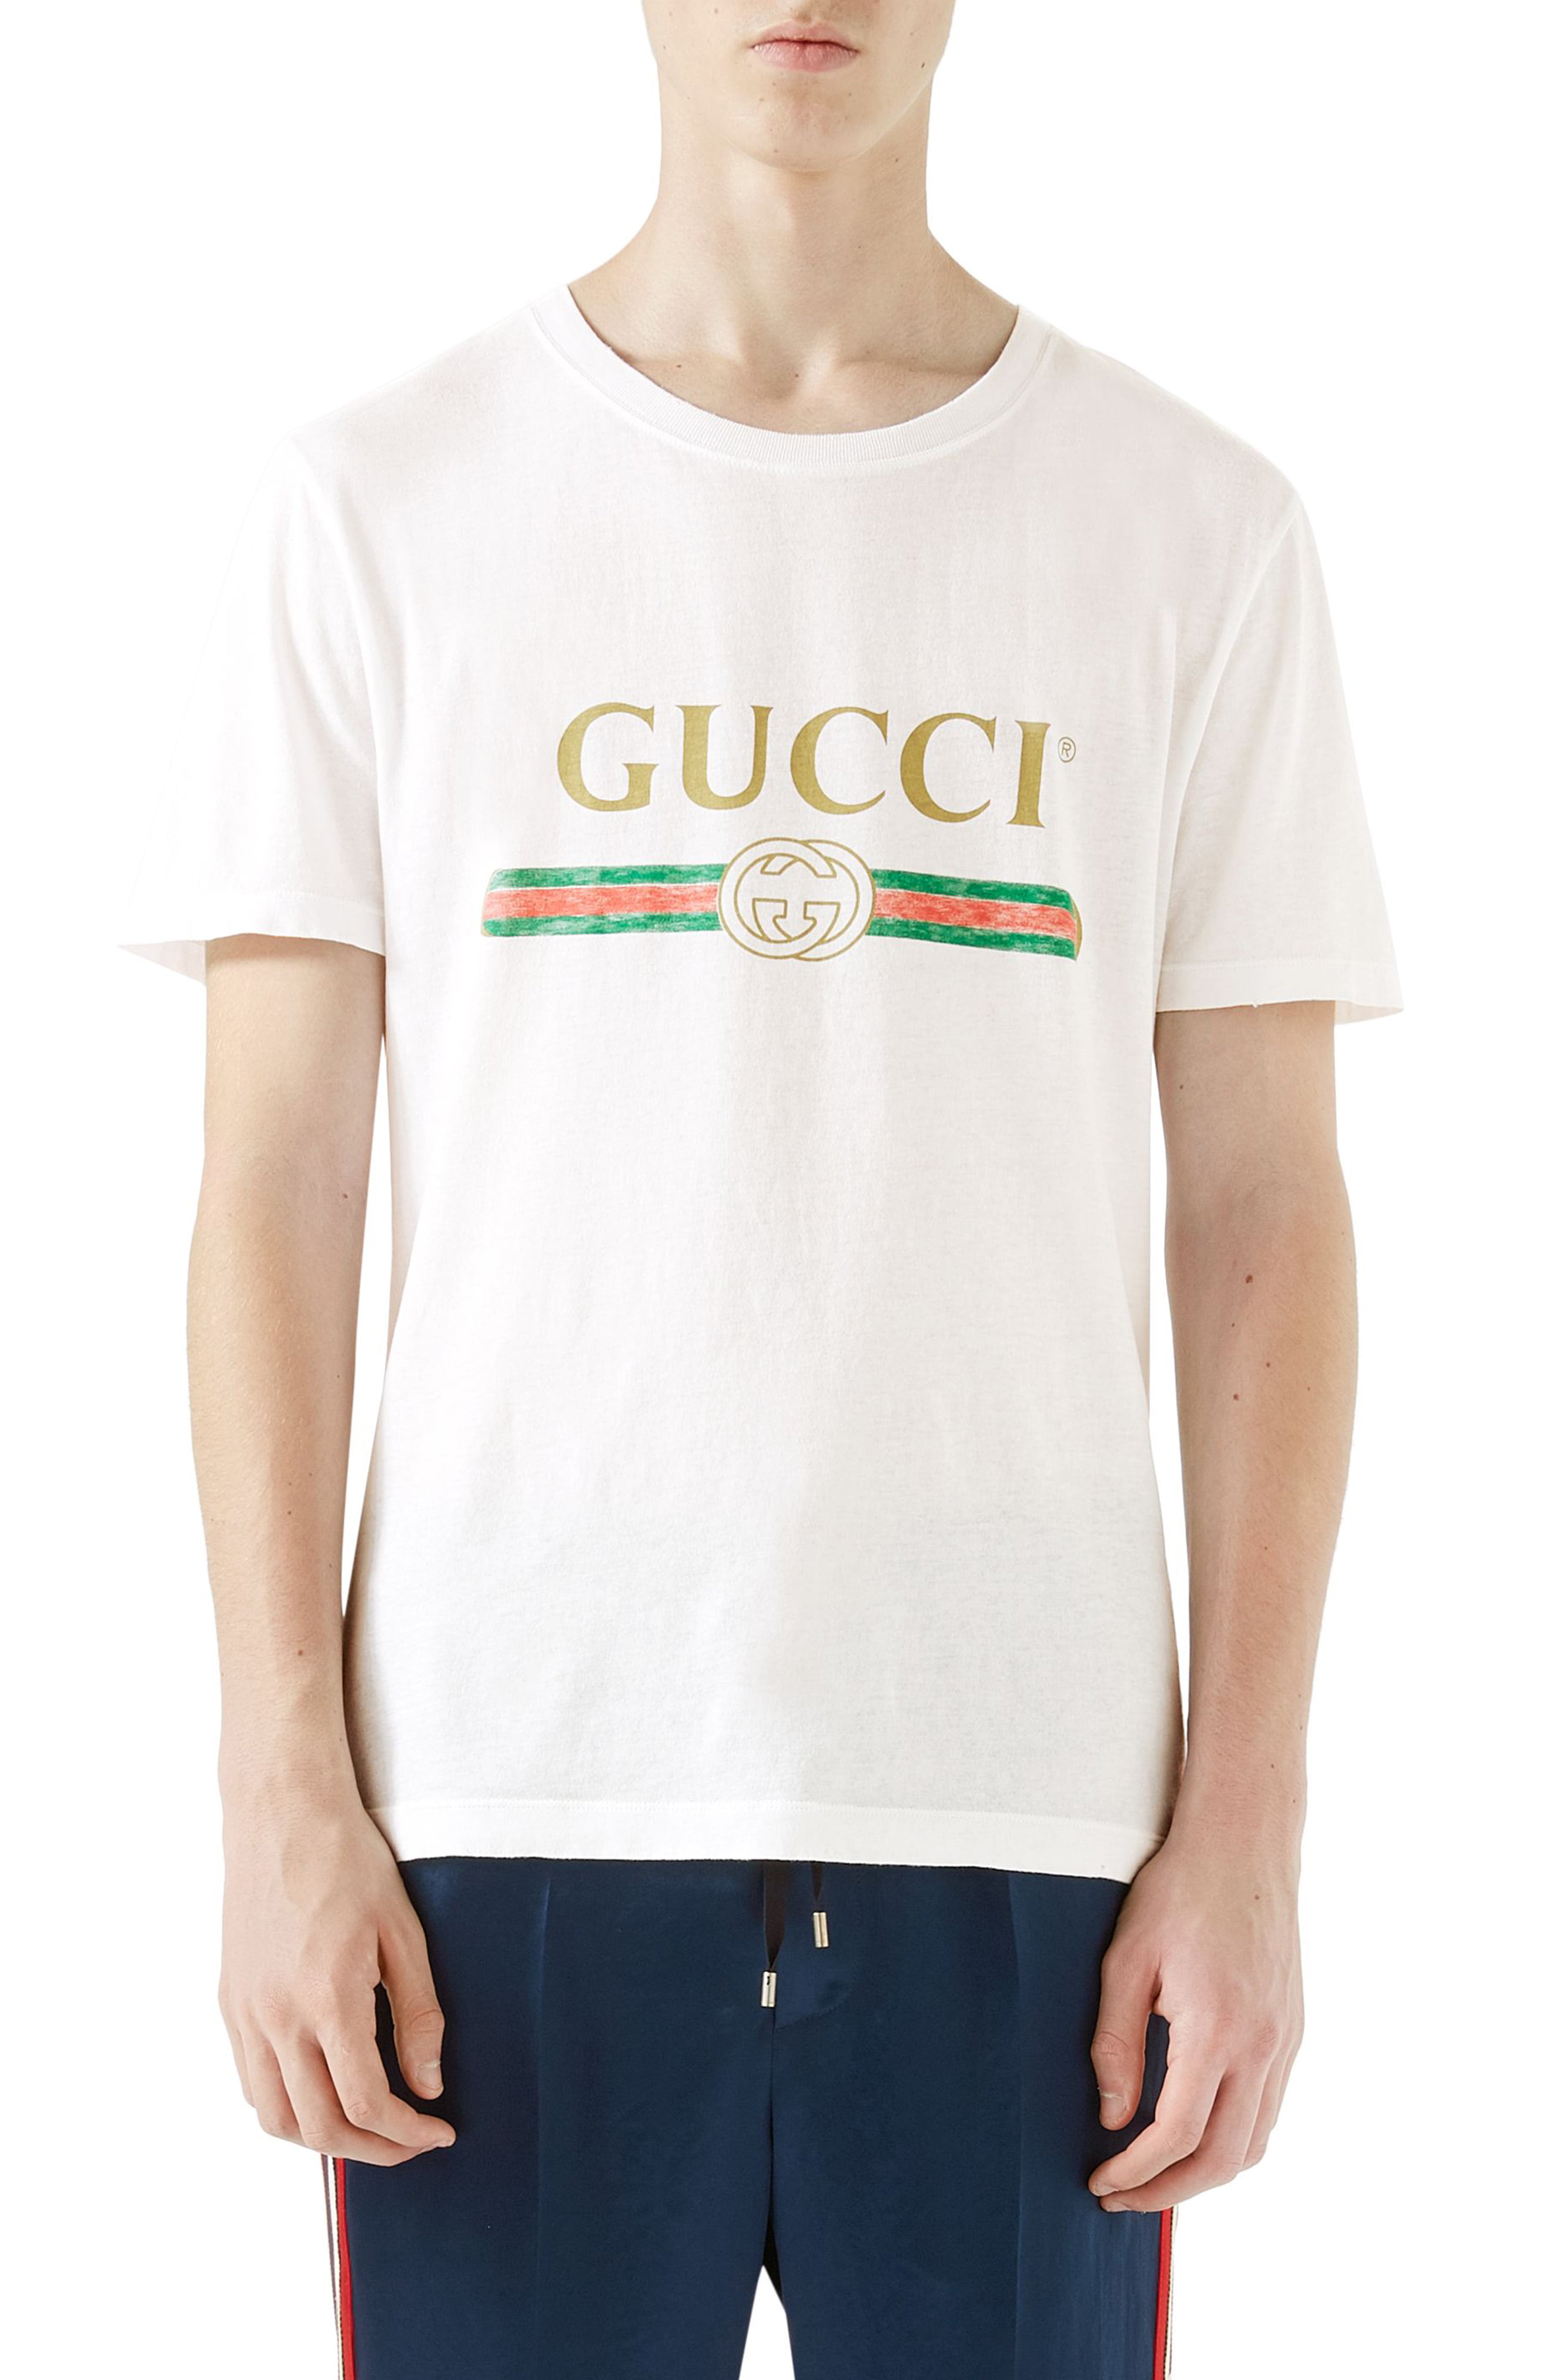 real gucci shirt price